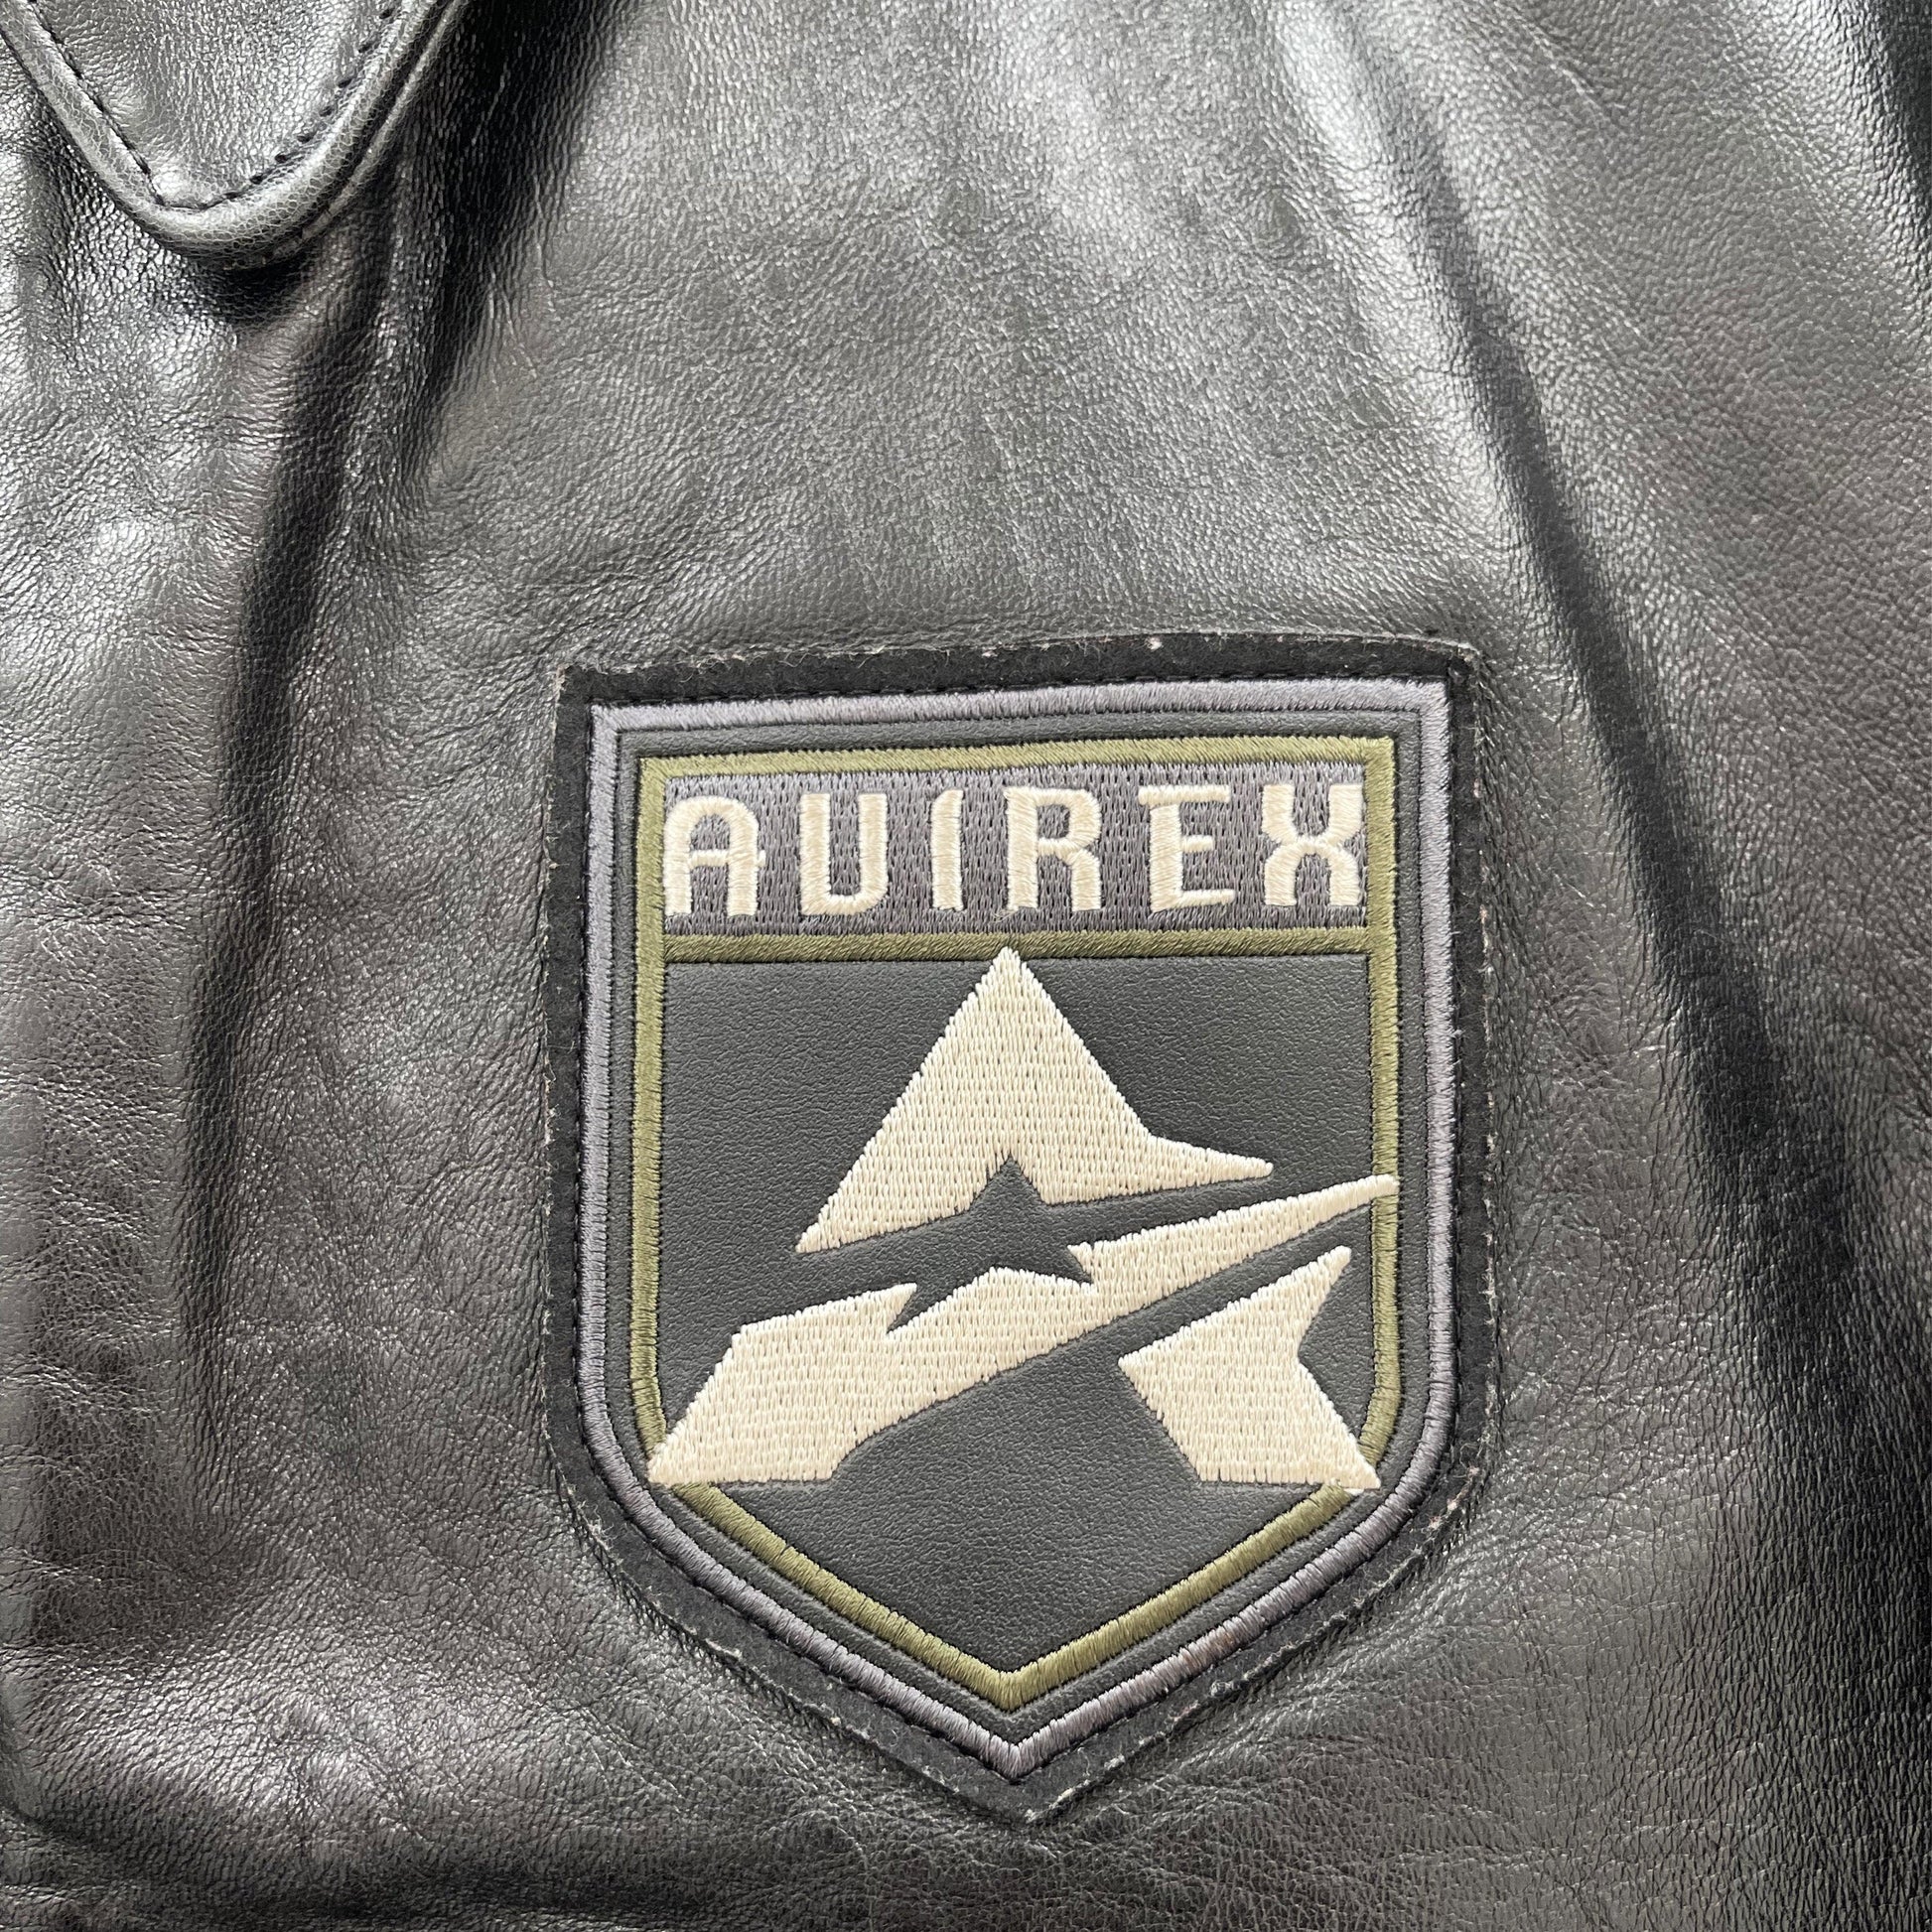 Avirex Leather Flight Jacket - Known Source